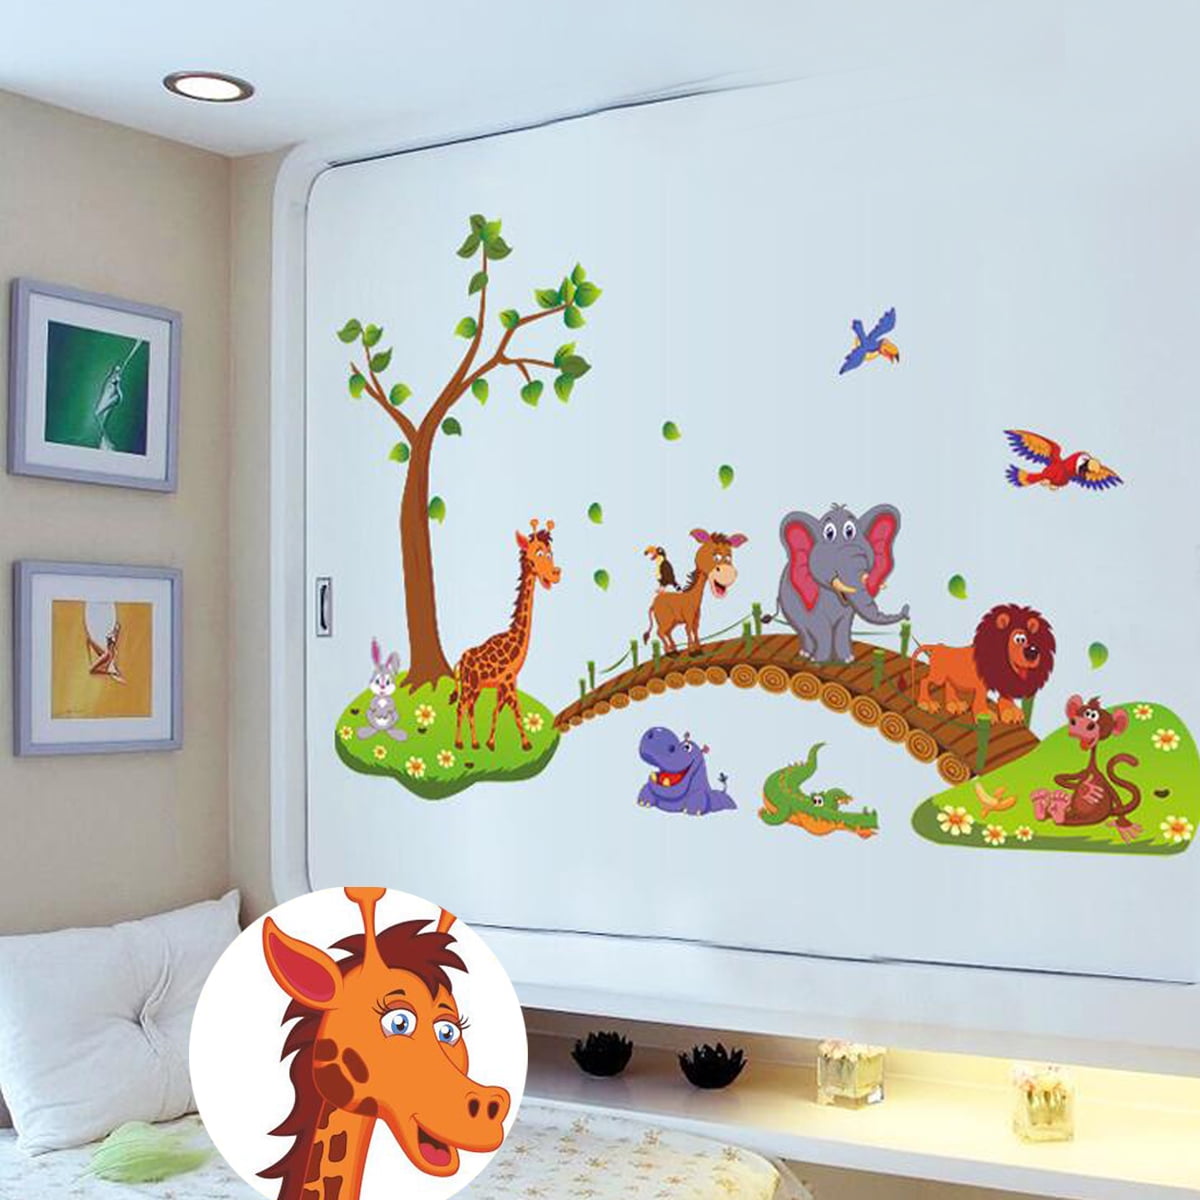 Mouse Hole Vinyl Mural Wall Art Sticker DecalBCLids Nursery Room Home DecorBCL 